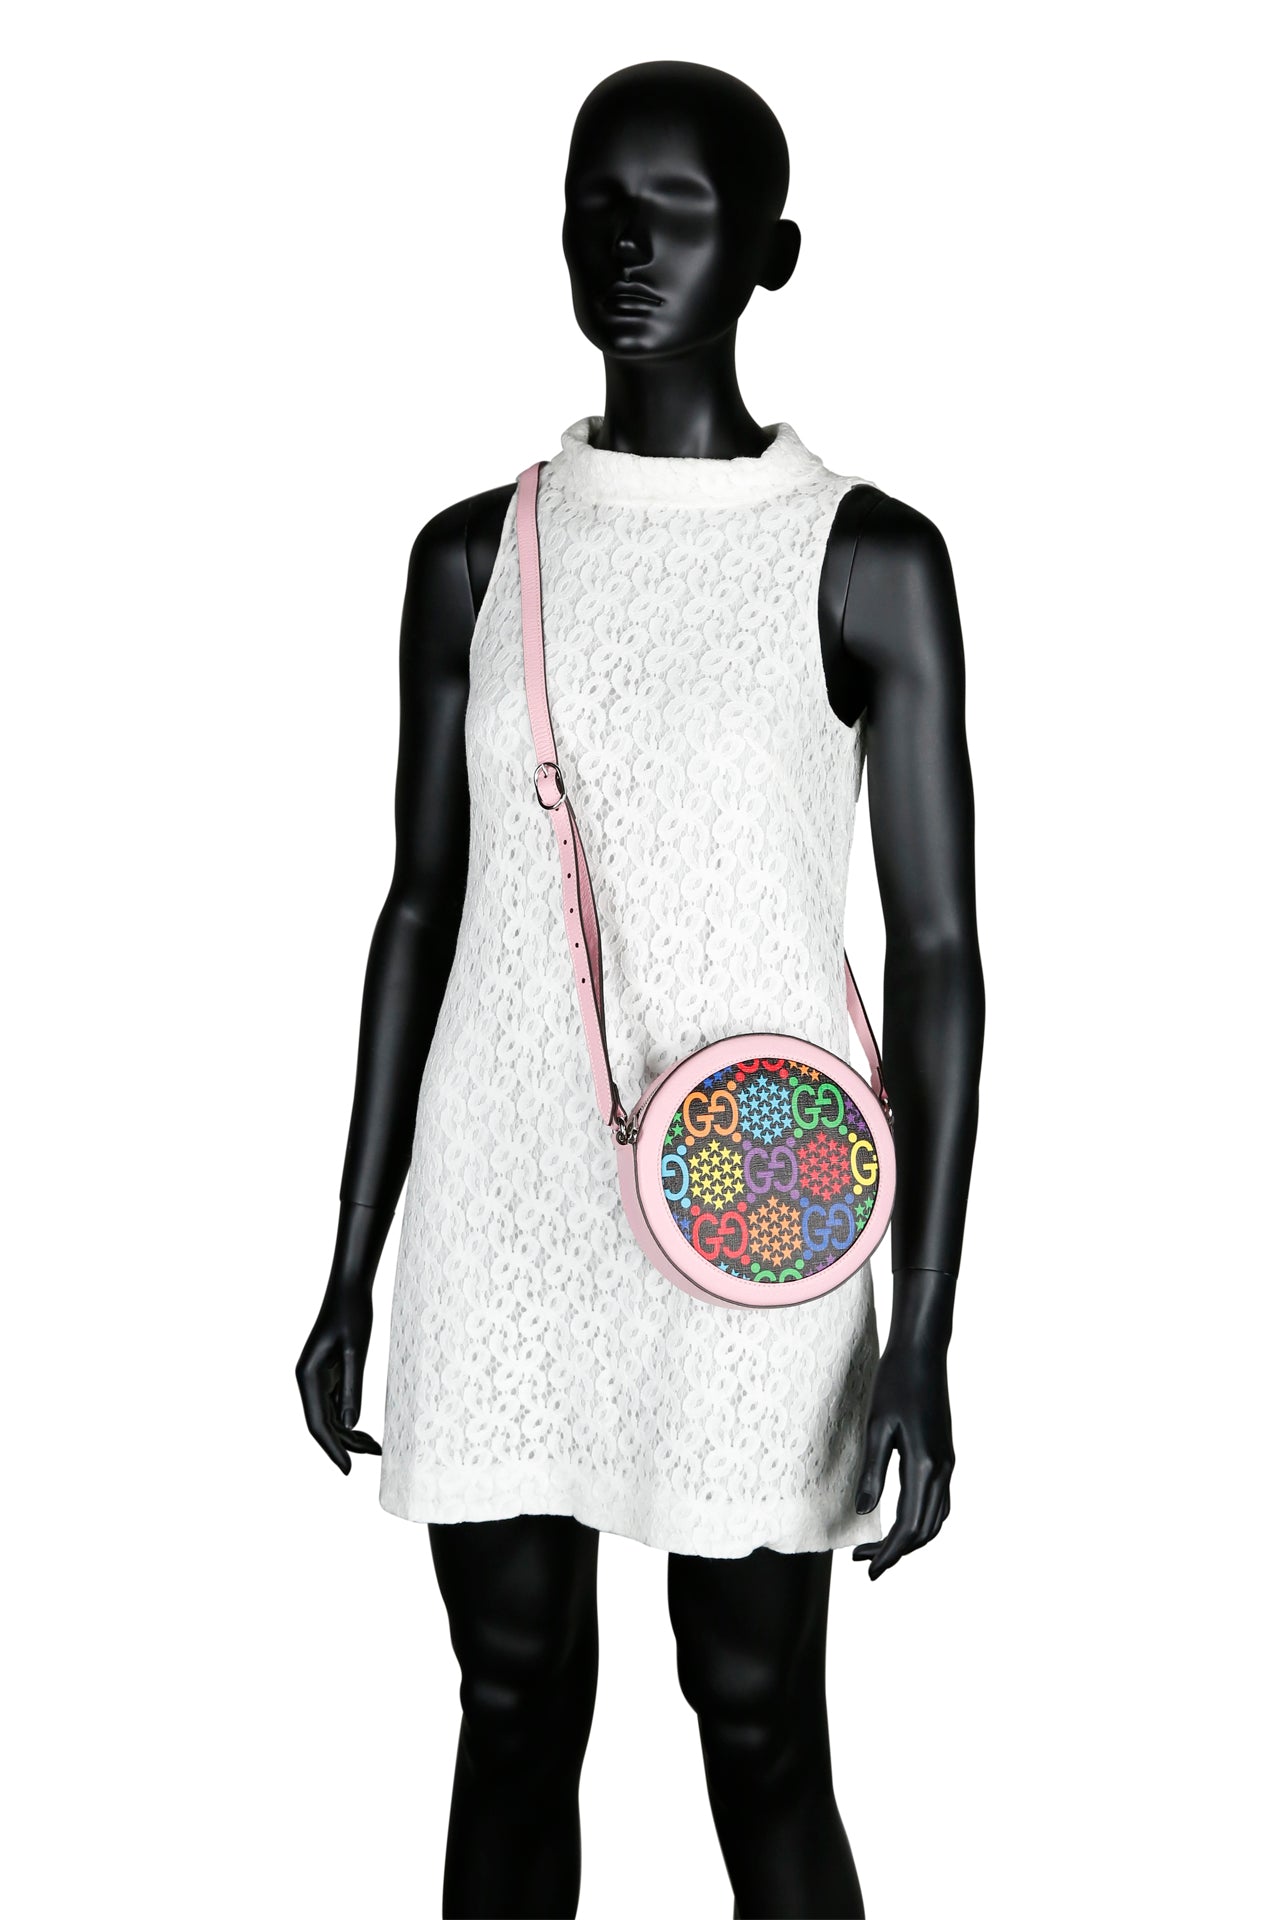 Gucci GG Supreme Monogram Psychedelic Round Shoulder Bag Black Multicolor Sugar Pink